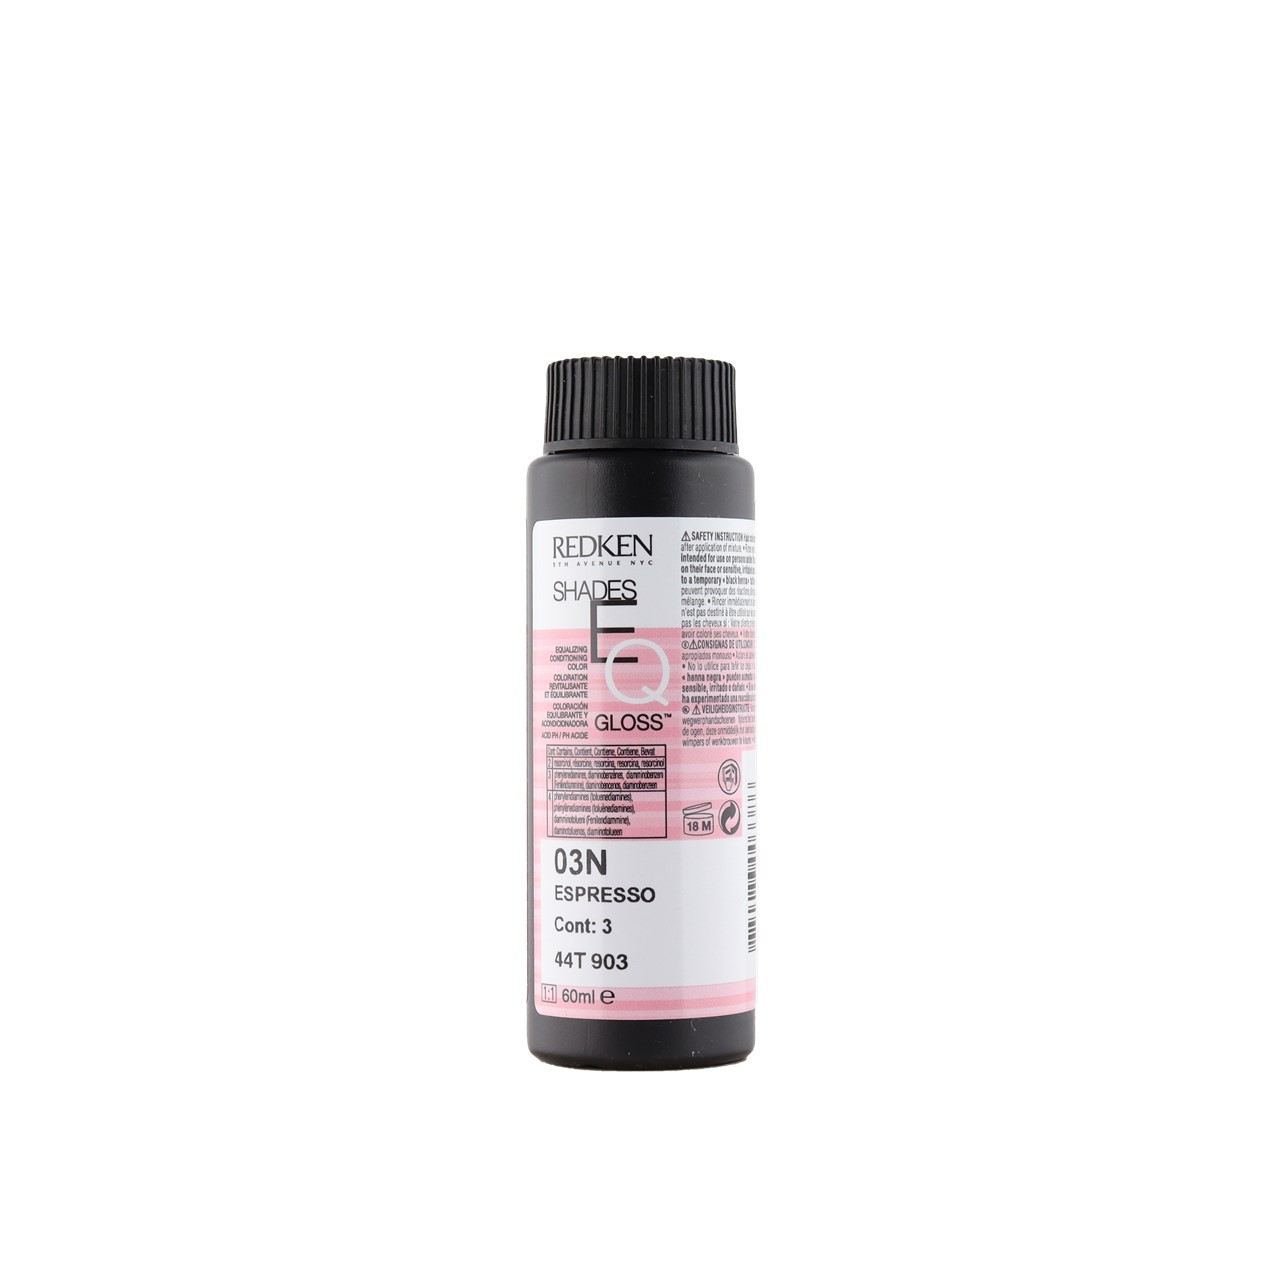 Redken Shades EQ Gloss Demi-Permanent Hair Dye 03N Espresso 60ml (2.03fl oz)